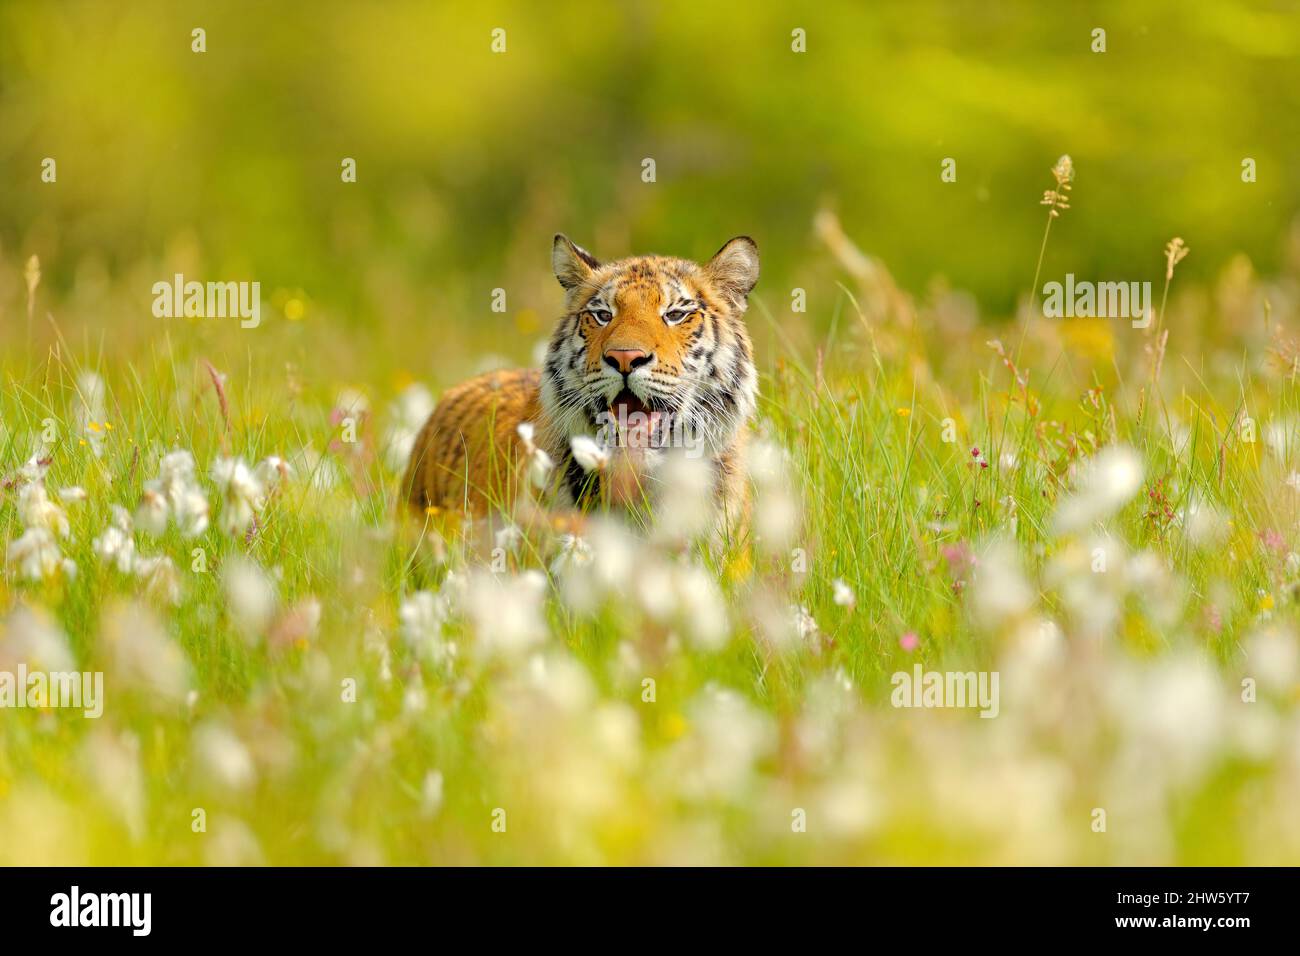 https://c8.alamy.com/comp/2HW5YT7/amur-tiger-hunting-in-green-white-cotton-grass-dangerous-animal-taiga-russia-big-cat-sitting-in-environment-wild-cat-in-wildlife-nature-siberia-2HW5YT7.jpg